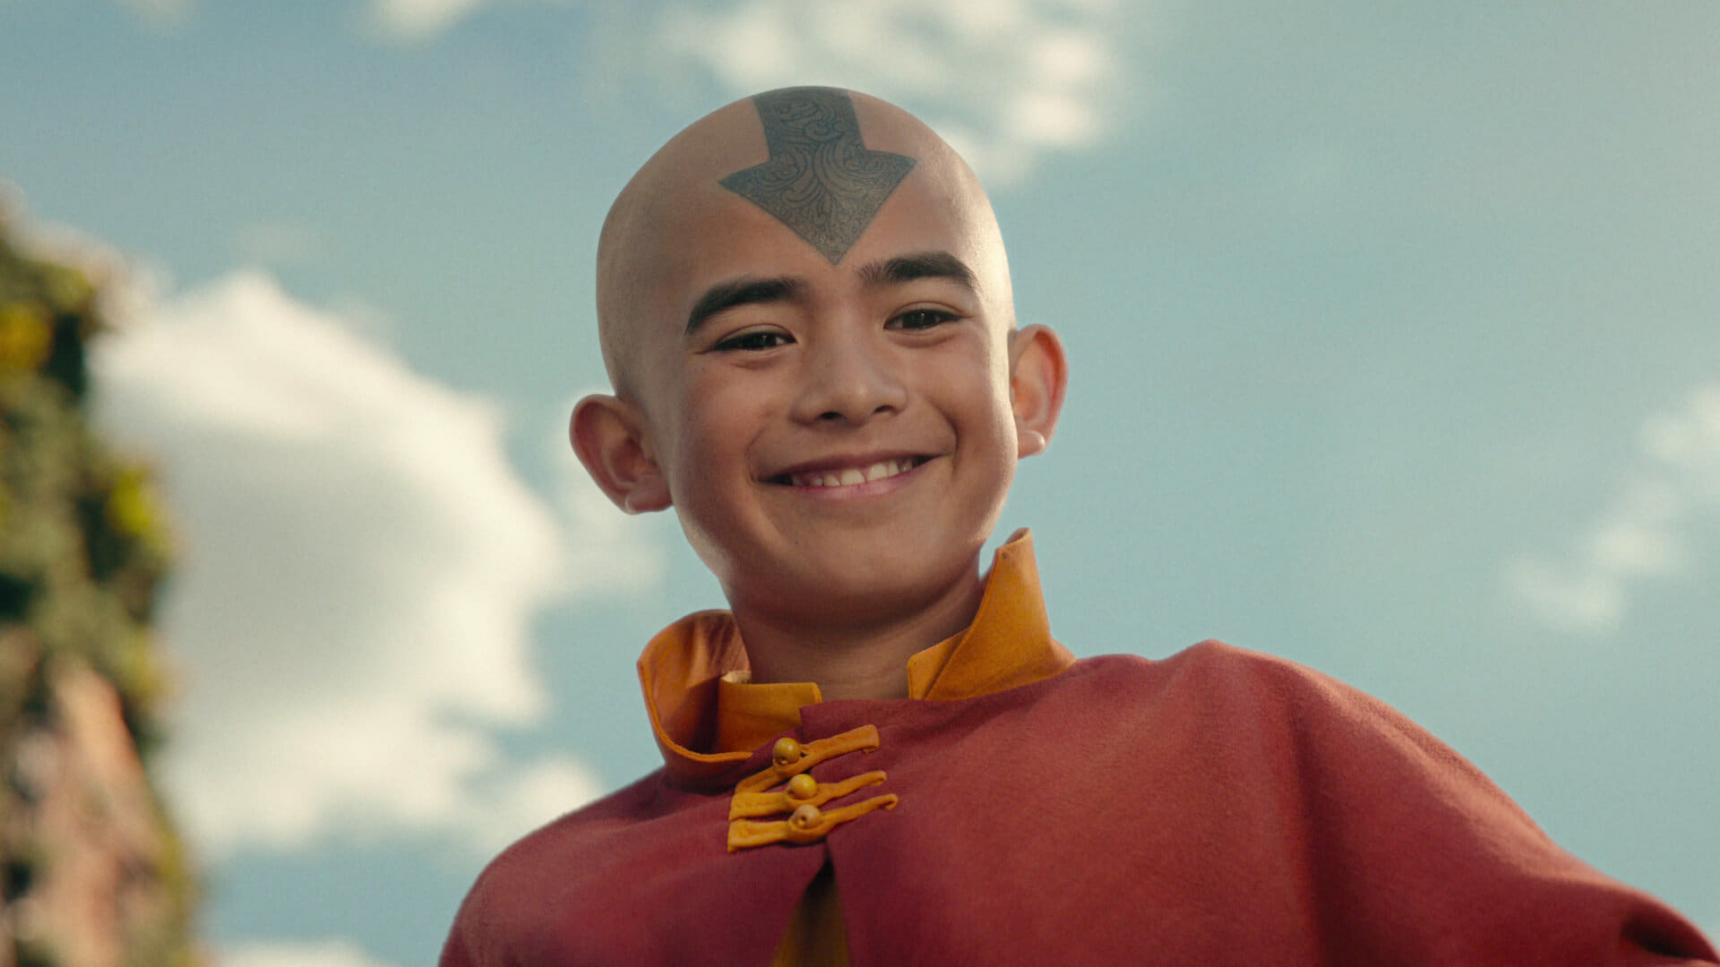 Poster del episodio 1 de Avatar: La leyenda de Aang online